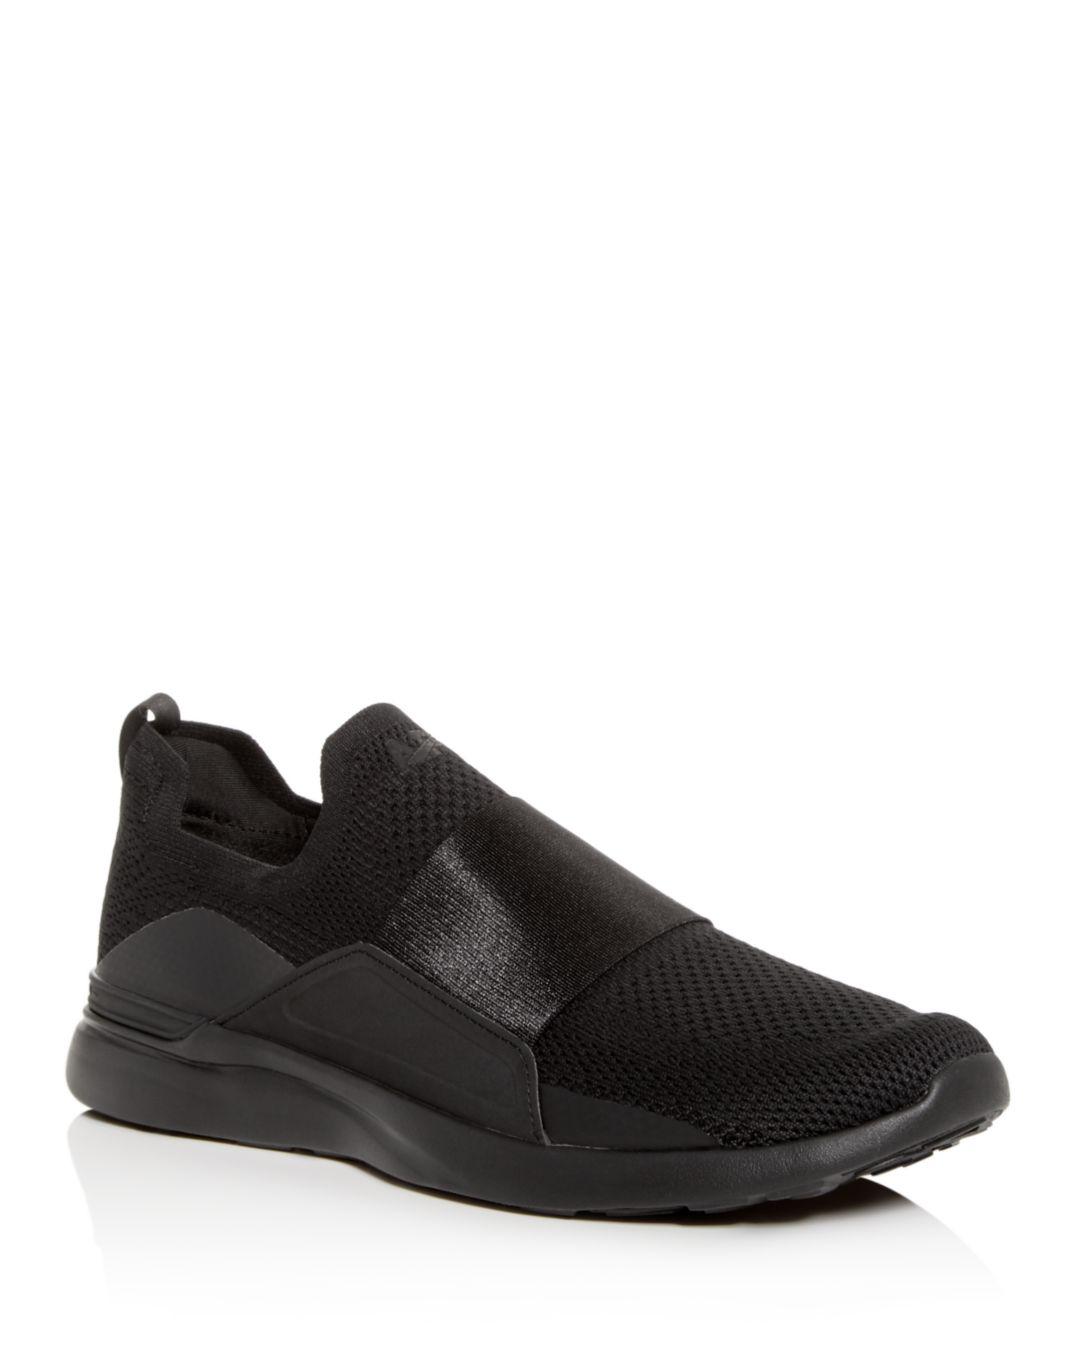 APL Shoes Men's Techloom Bliss Knit Slip - On Sneakers in Black/Black ...